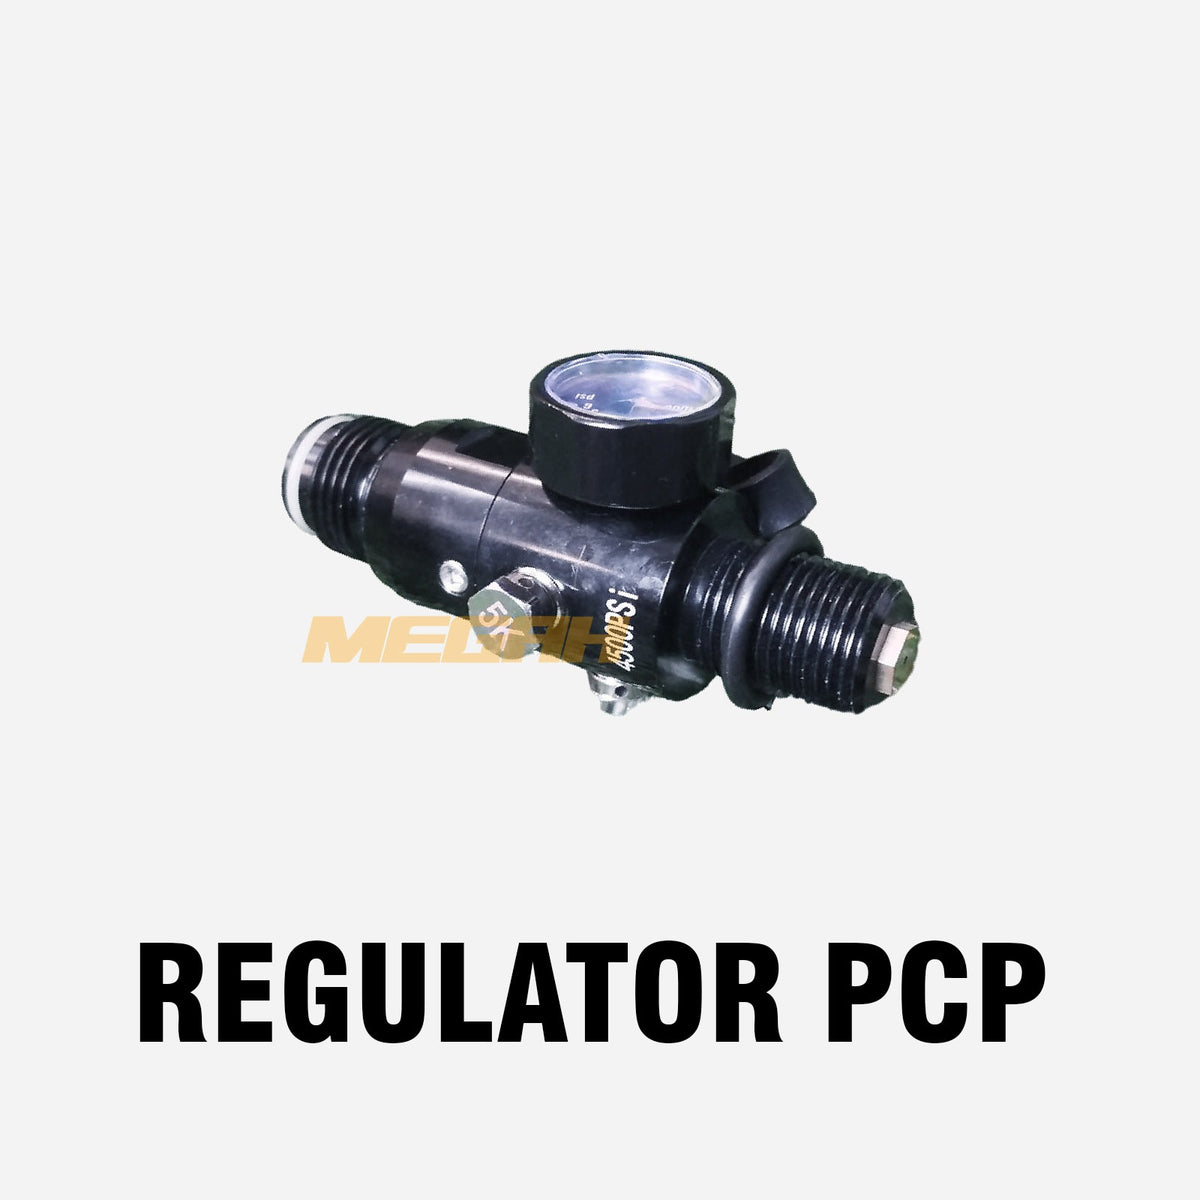 REGULATOR PCP - M18